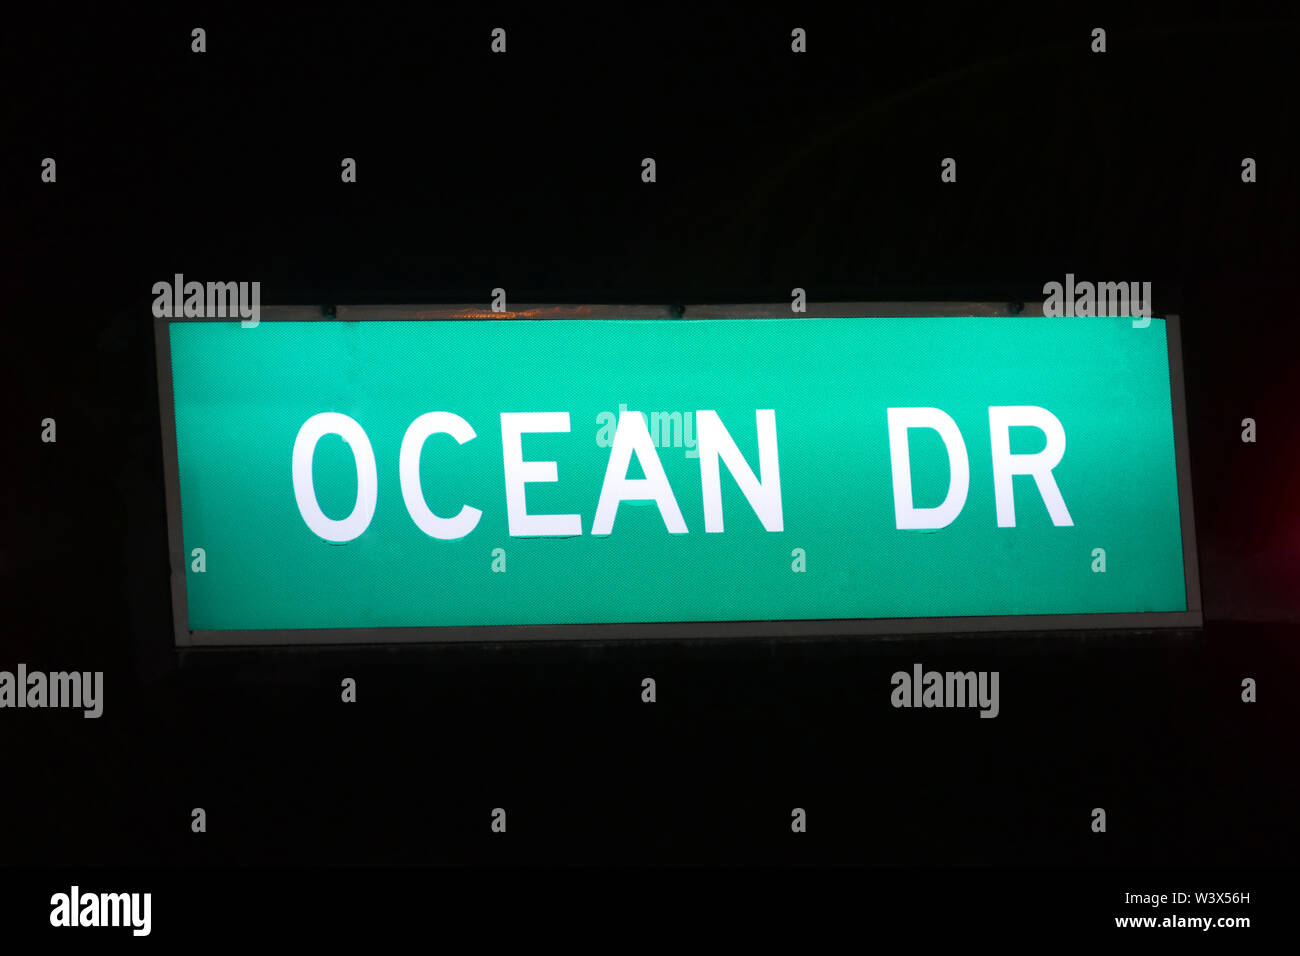 Signe de la circulation de la célèbre Ocean Drive, à l'Art Déco, Miami Beach, Floride Banque D'Images